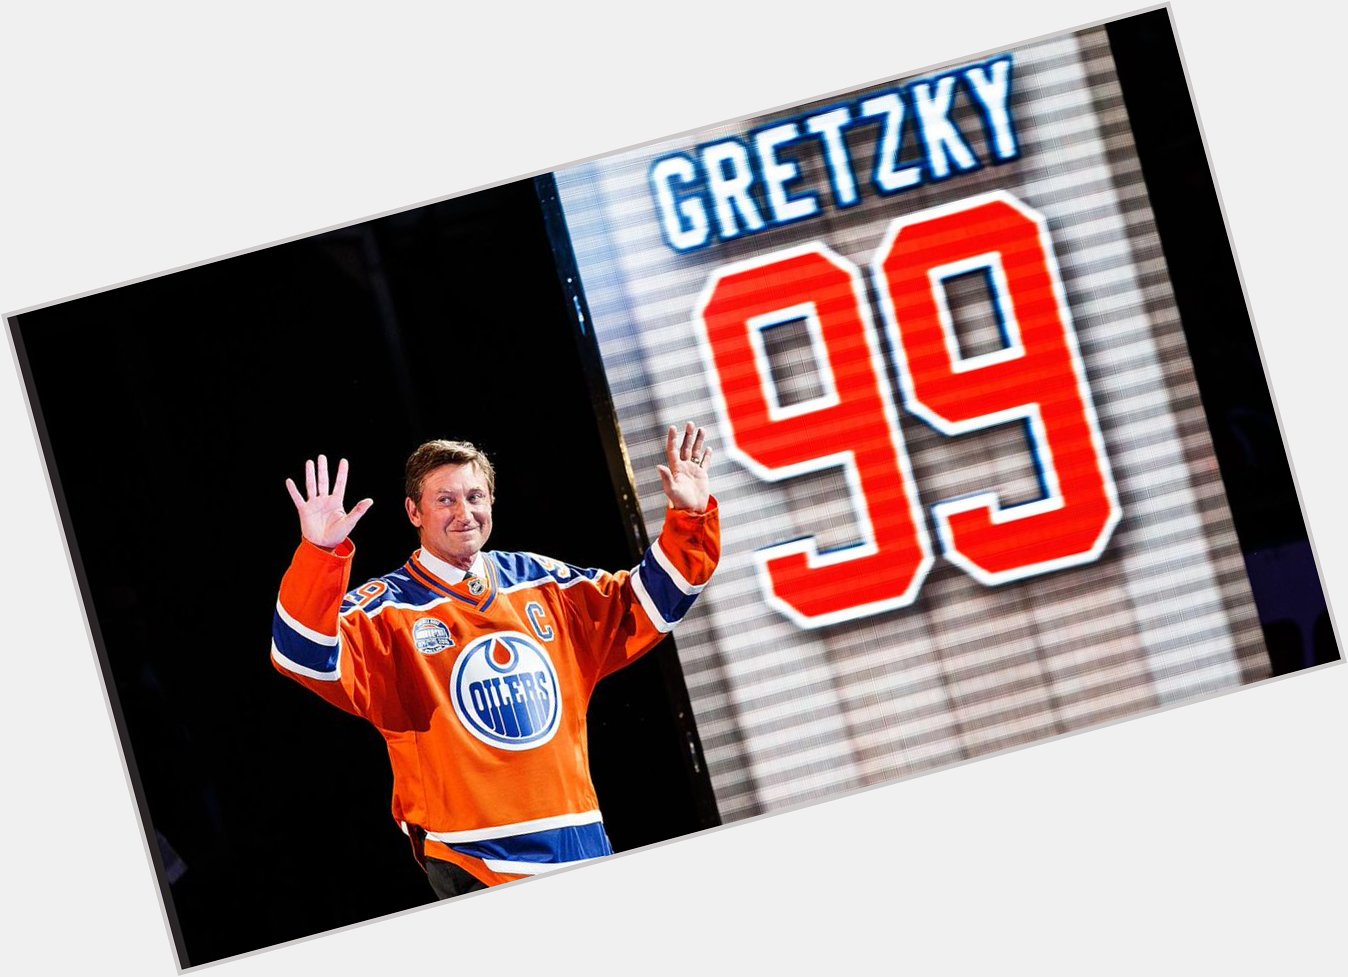 Happy birthday Wayne Gretzky! \The Great One\ turns 57 today.   